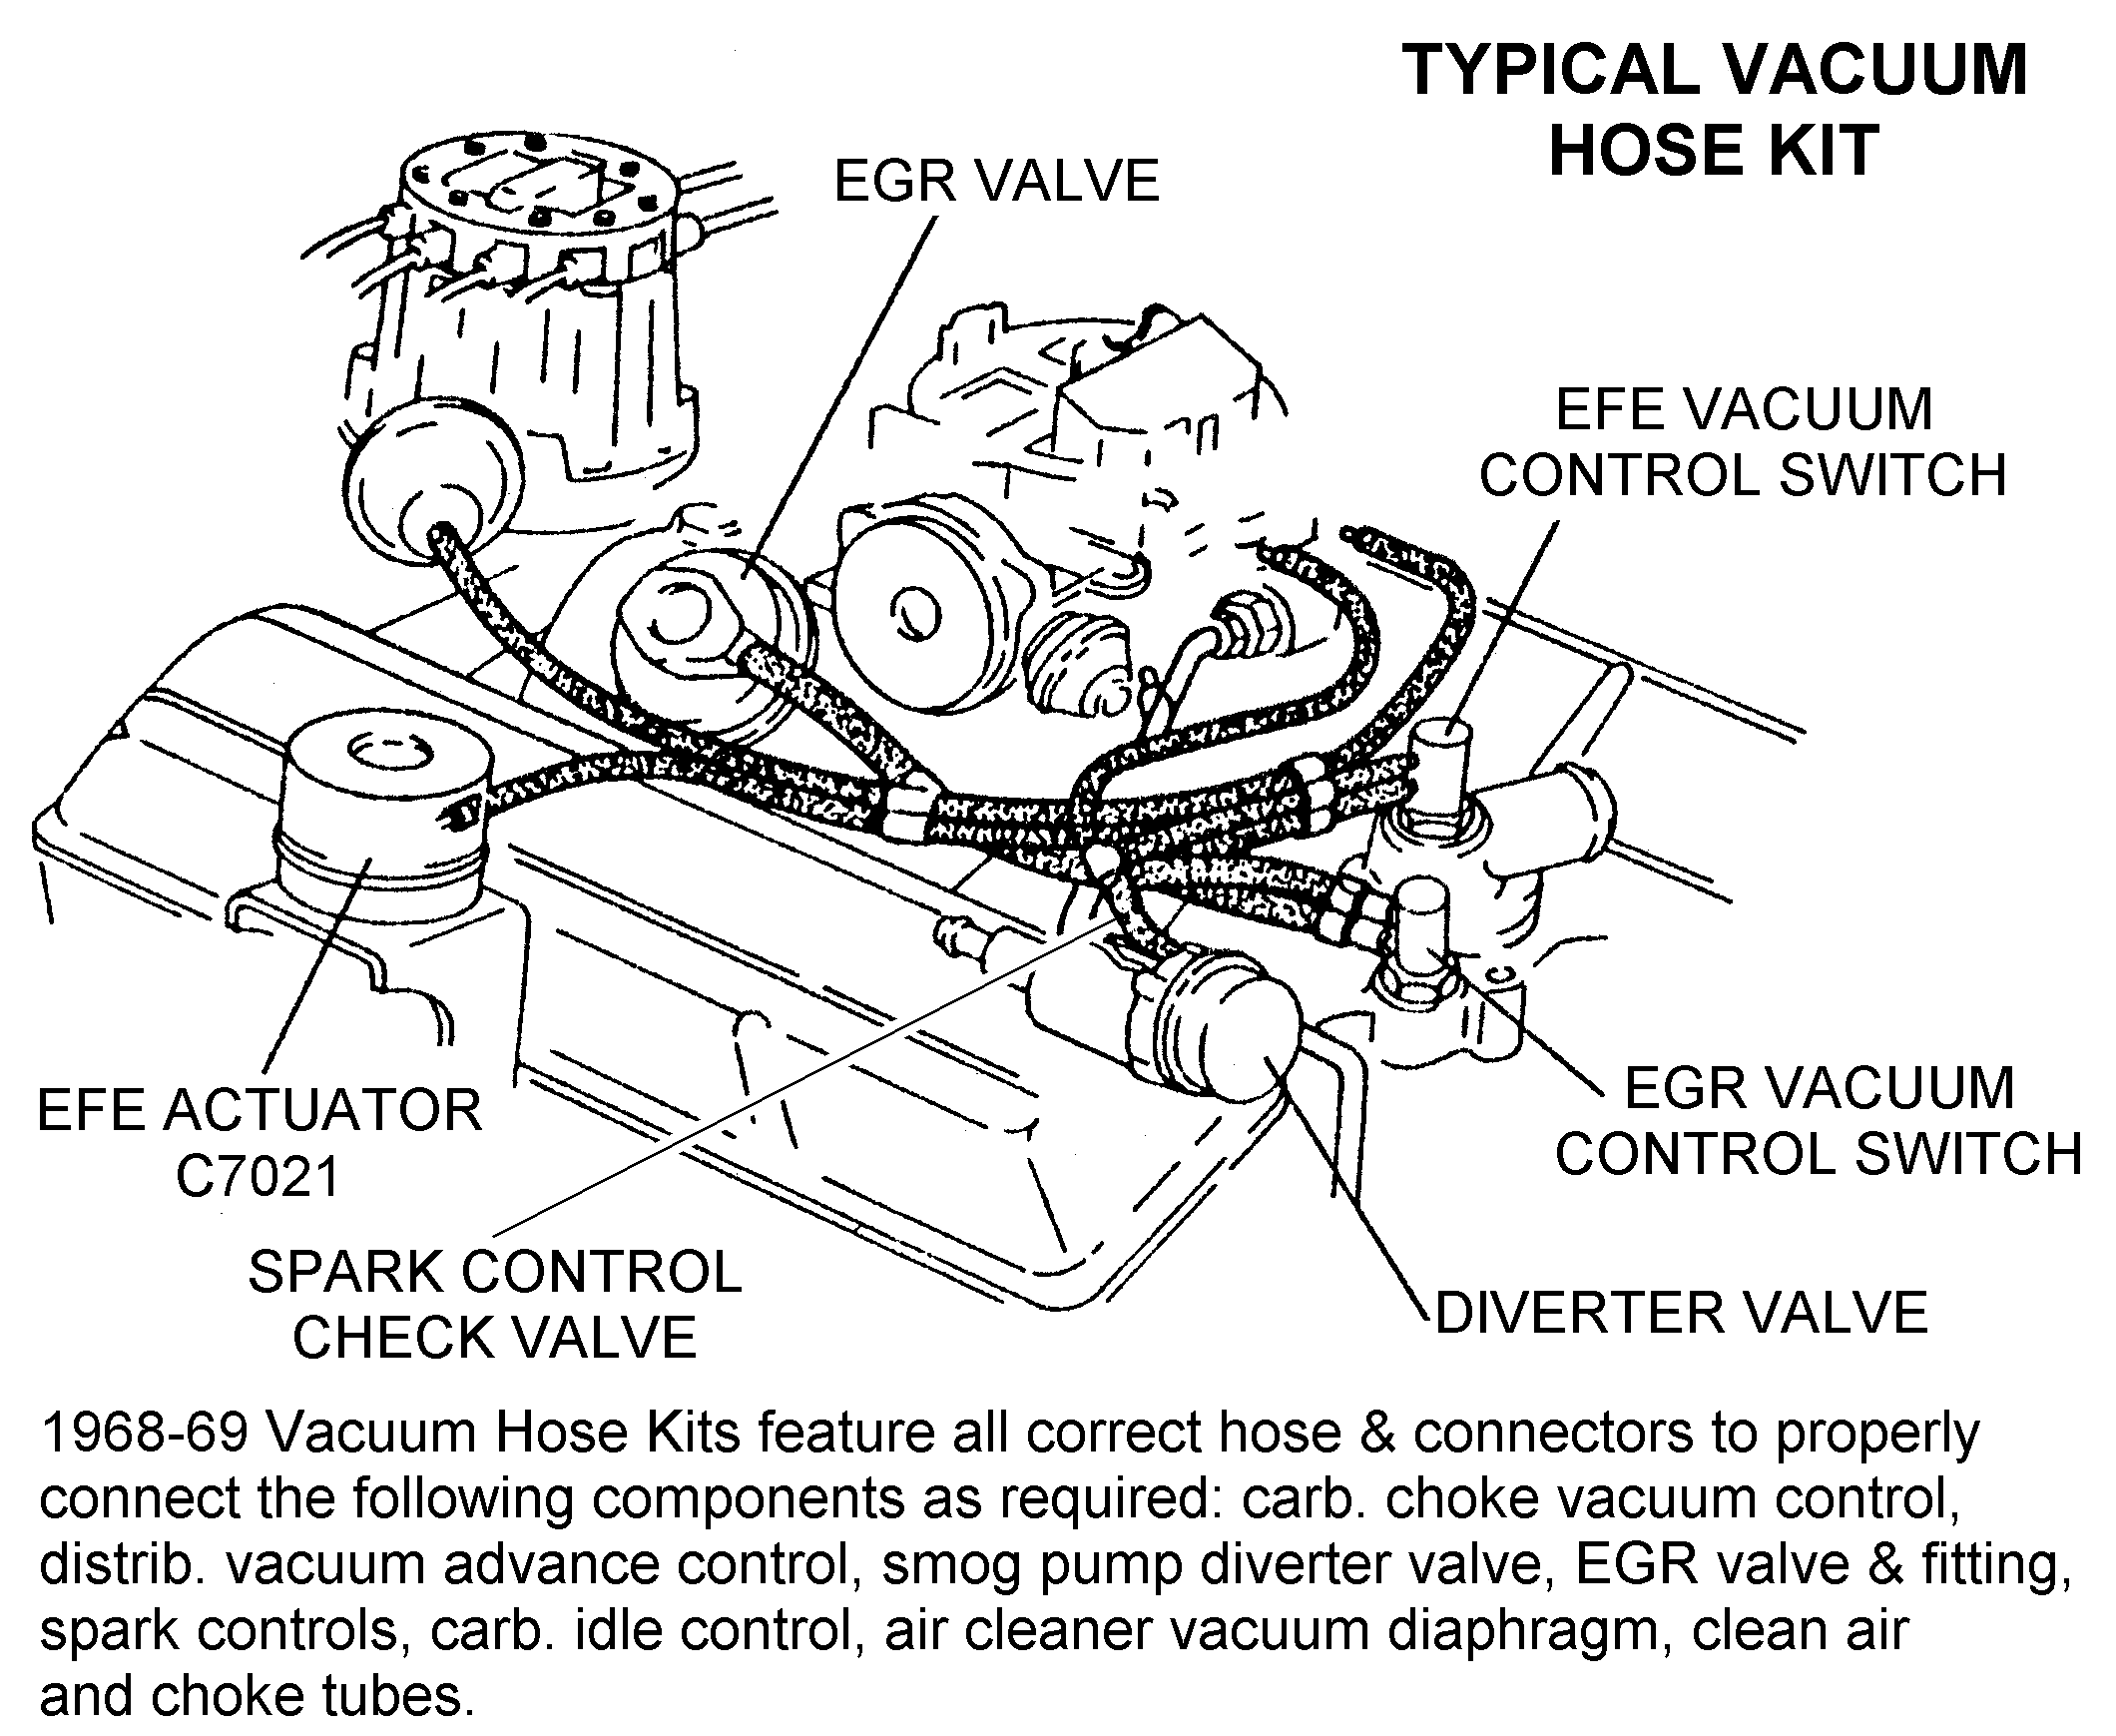 Typical Vacuum Hose Kit Diagram View Chicago Corvette Supply